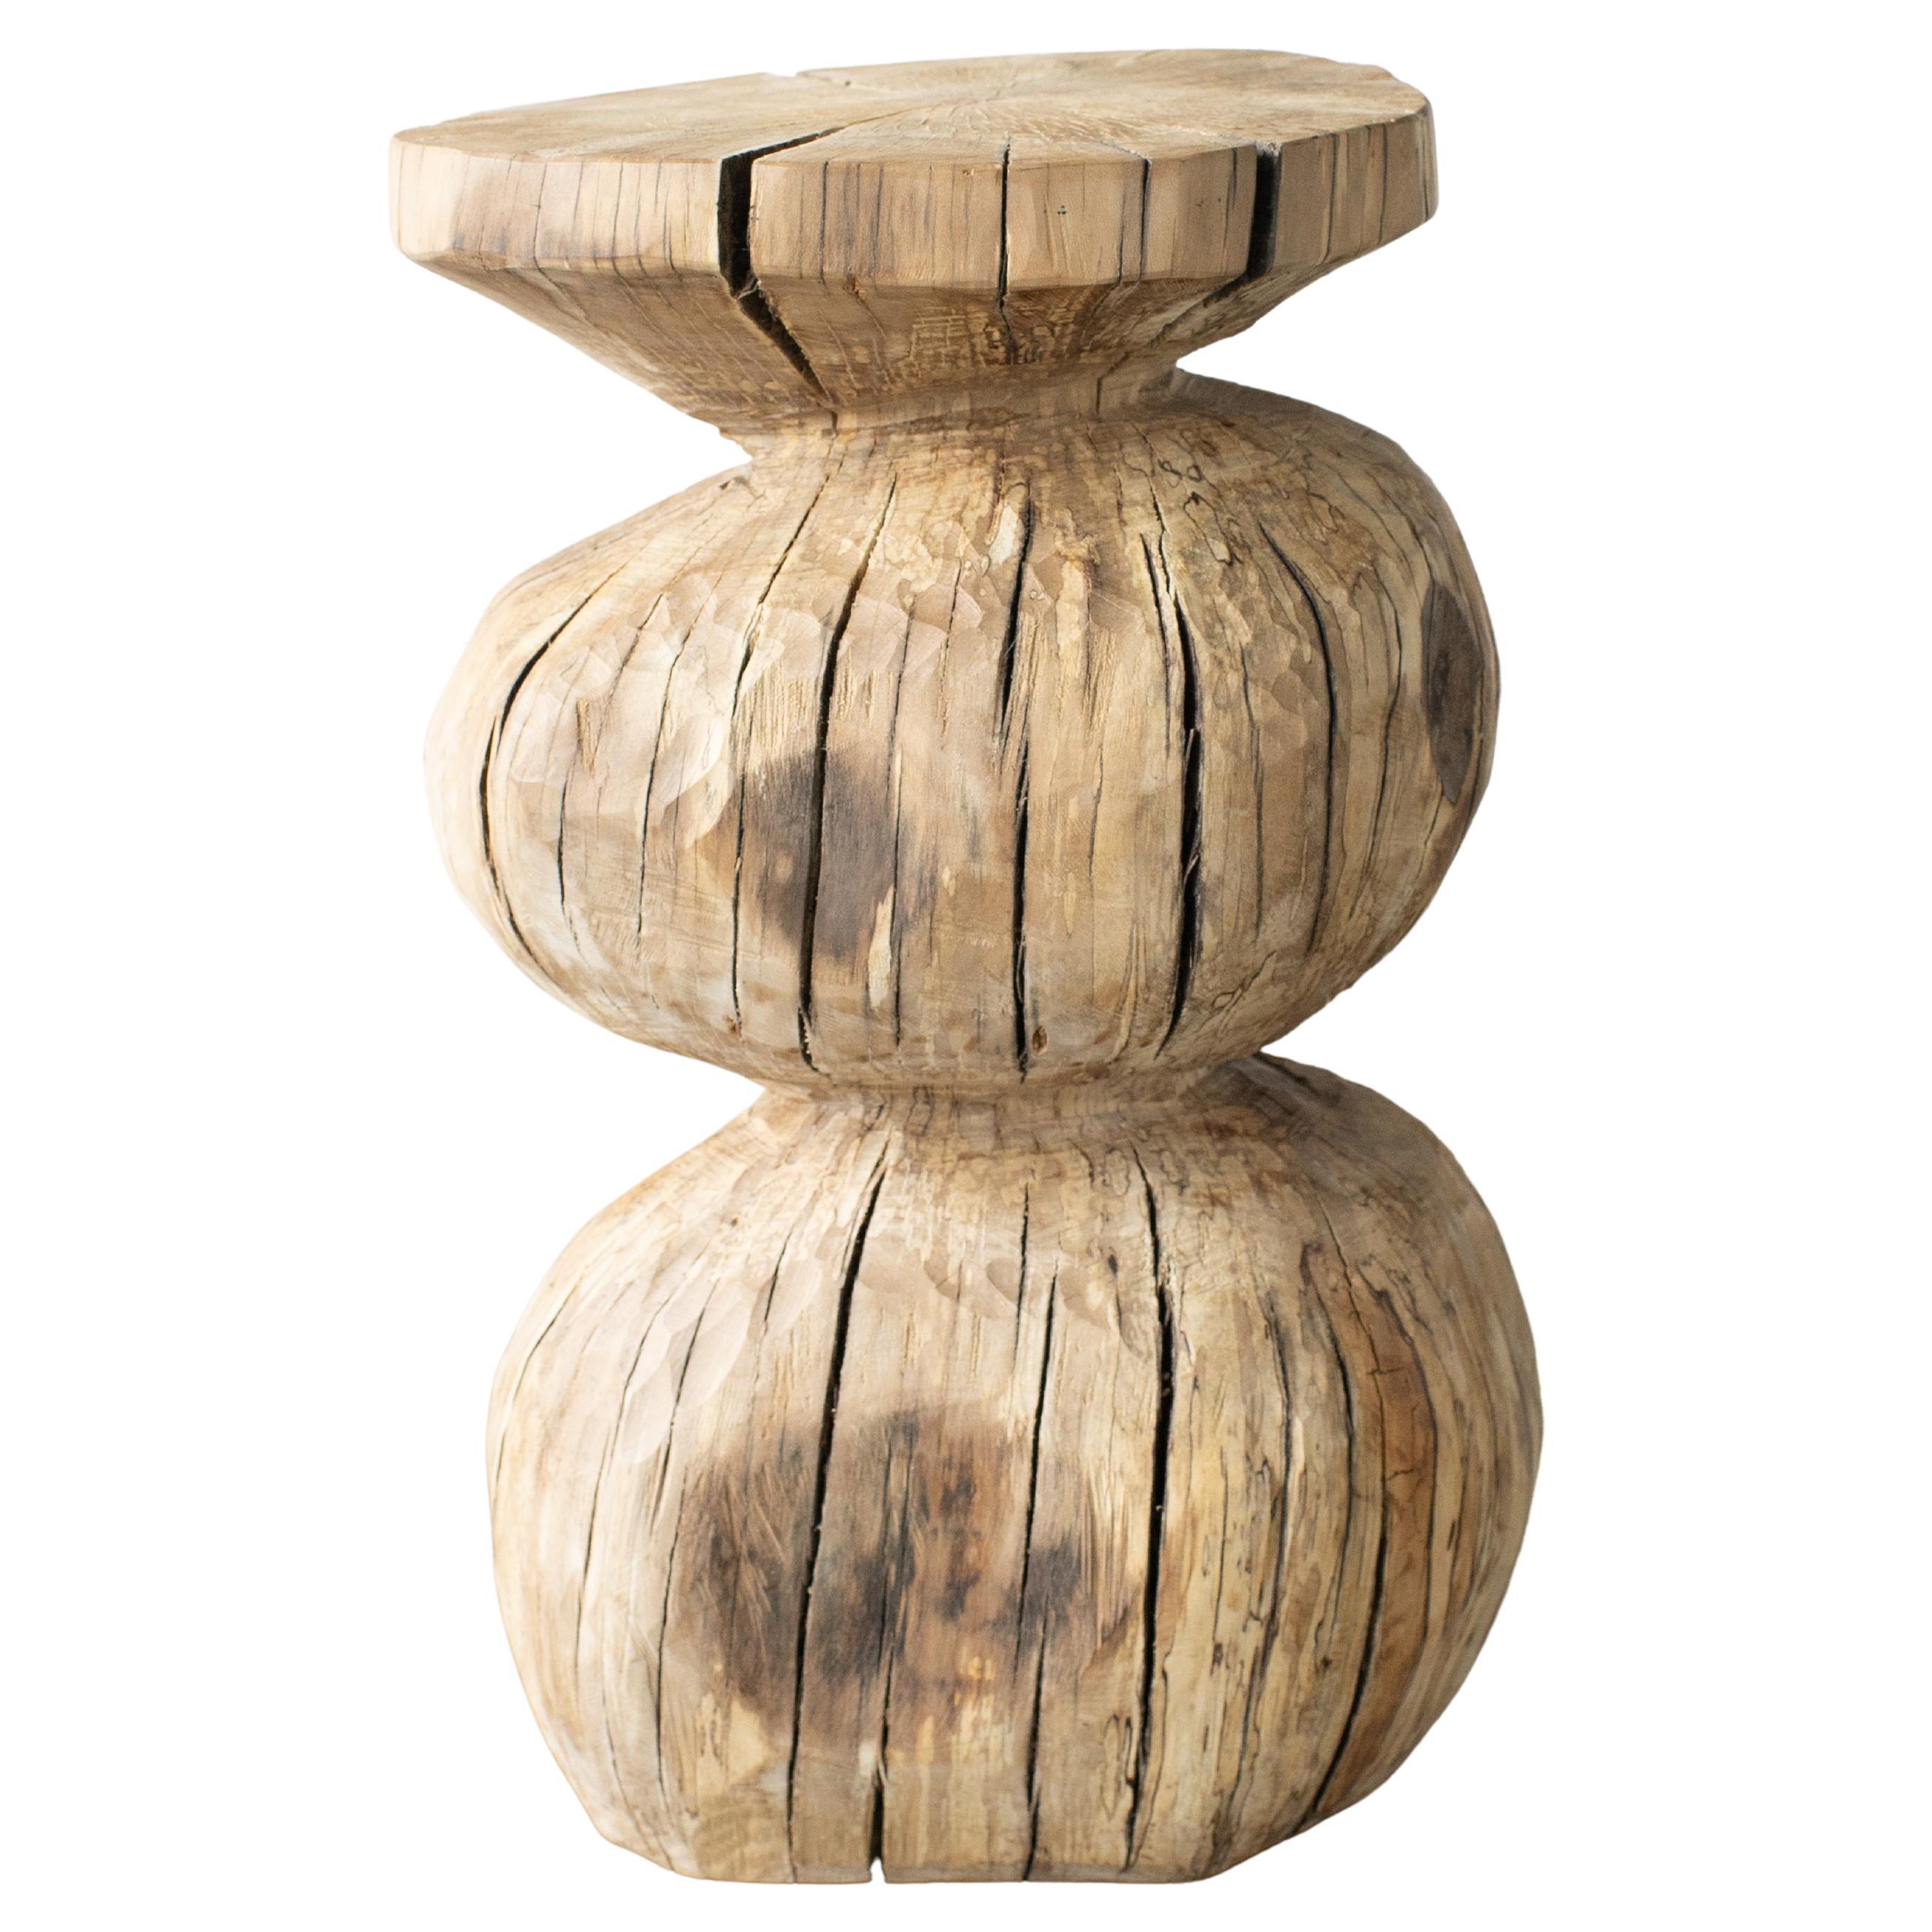 Hiroyuki Nishimura Furniture Sculptural Wood Stool 10-12 Tribal Glamping